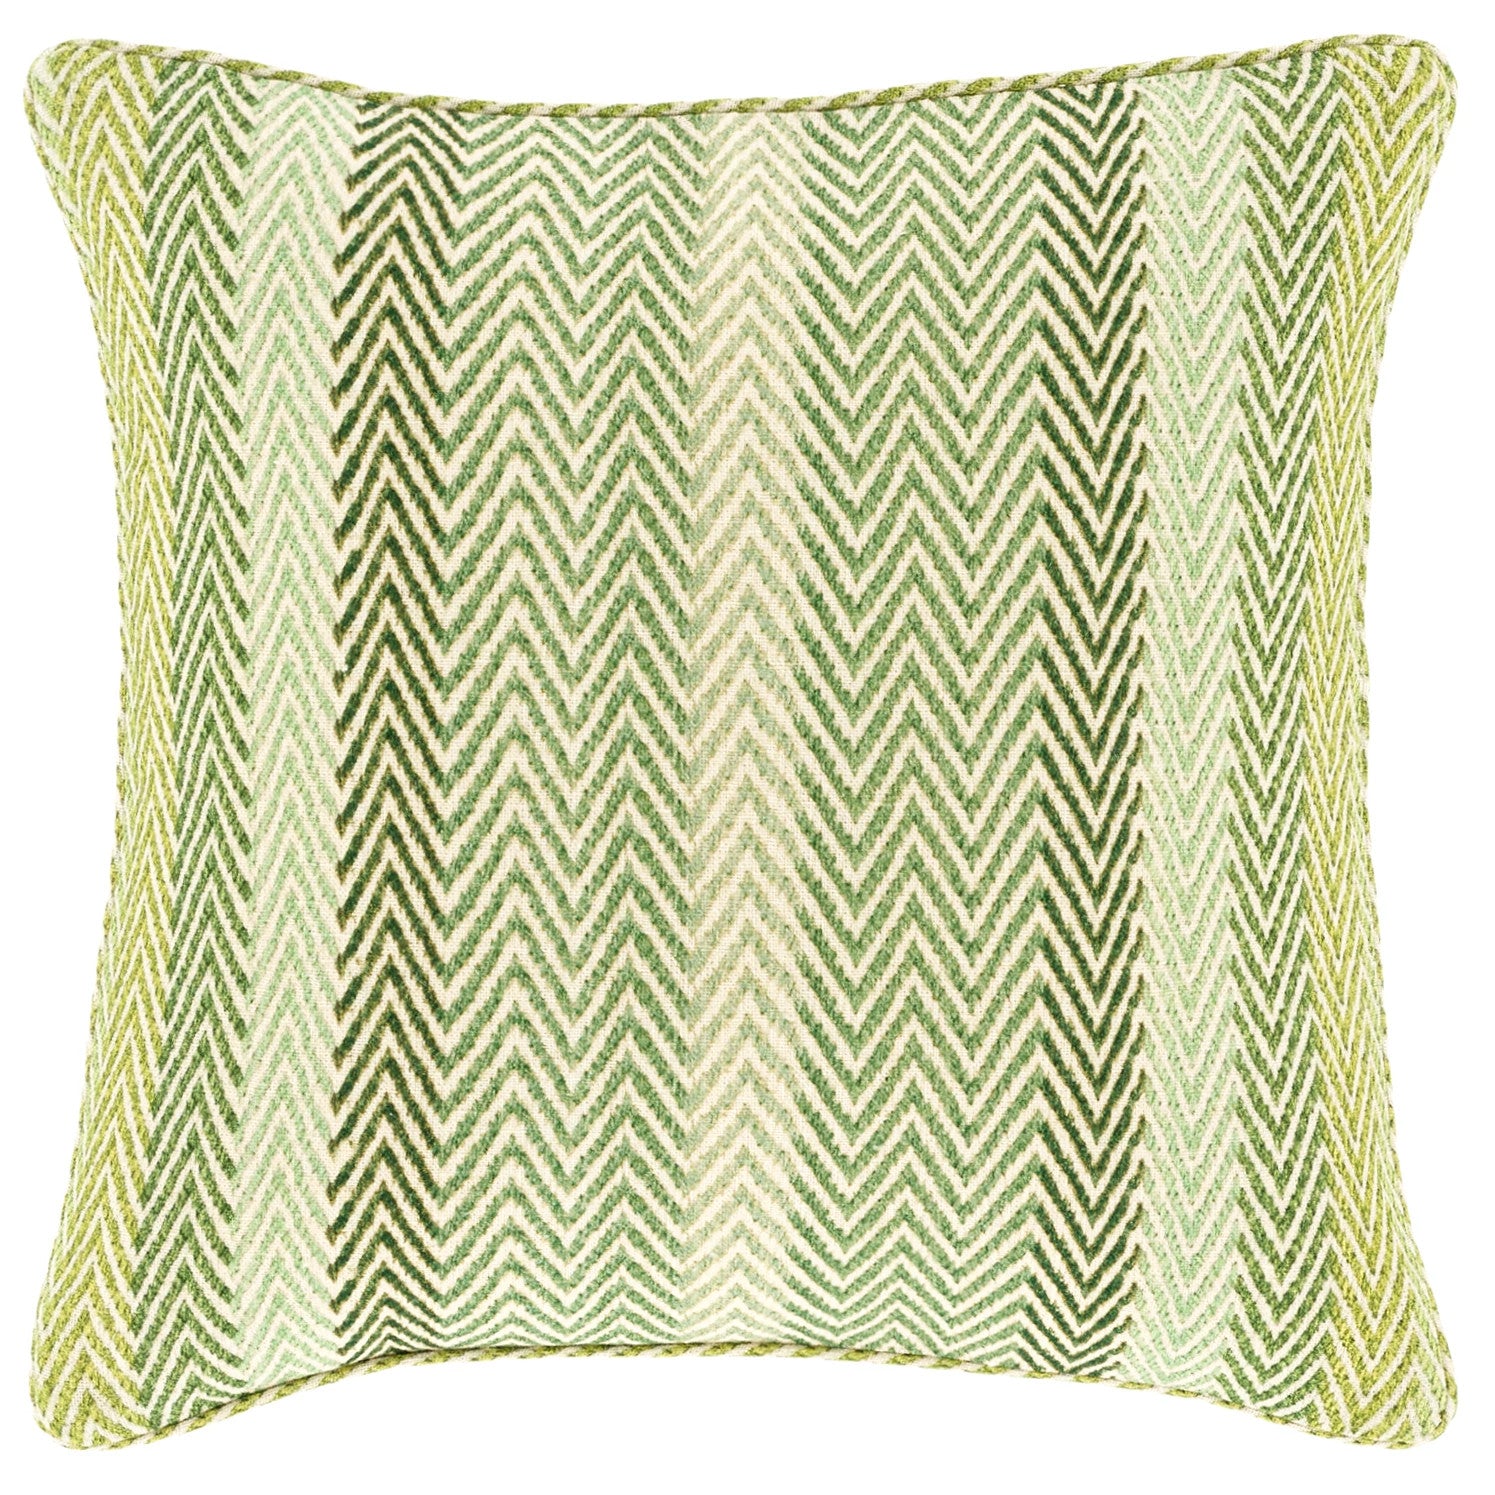 Nip Tuk Linen Green/Ivory Decorative Pillow